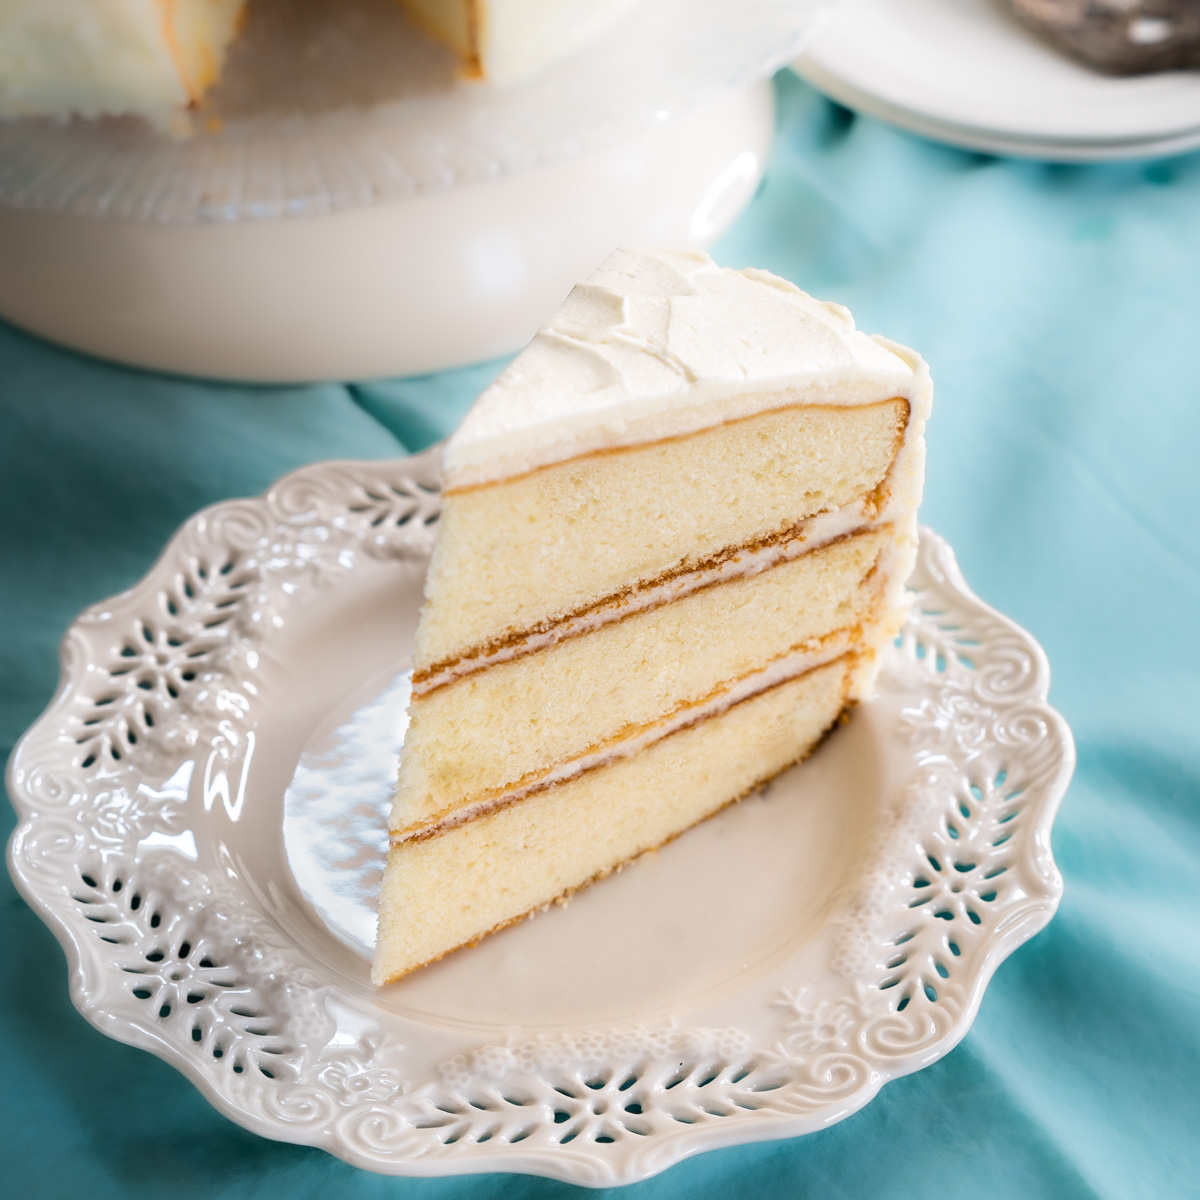 Homemade Paleo Vanilla Cake (with Almond Flour) - Bake It Paleo